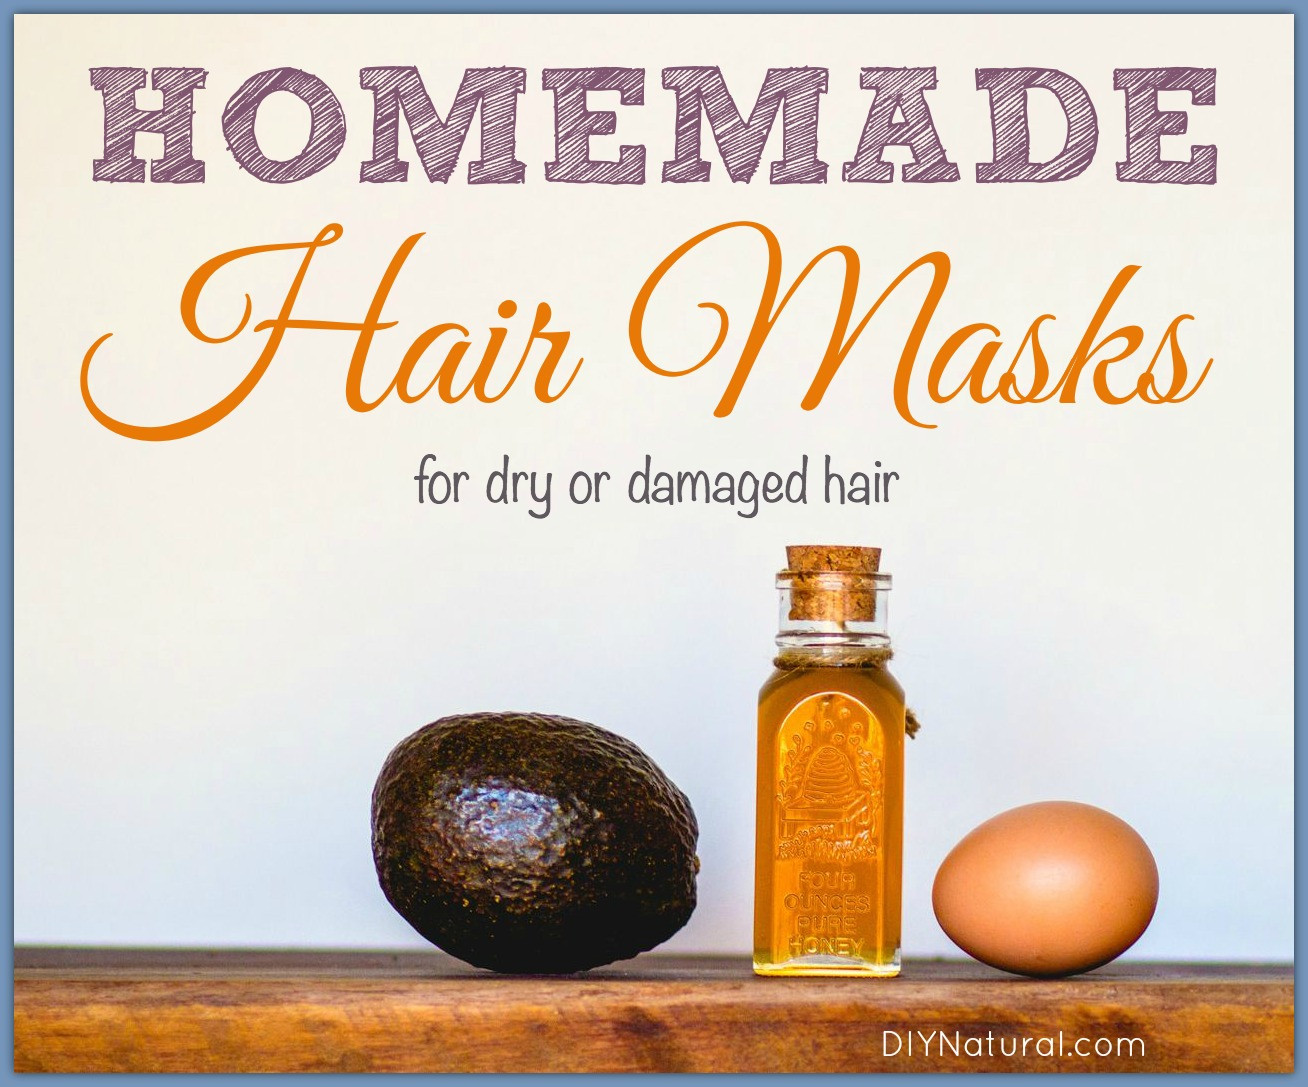 DIY Dry Hair Mask
 Homemade Hair Mask Several Recipes for Dry or Damaged Hair